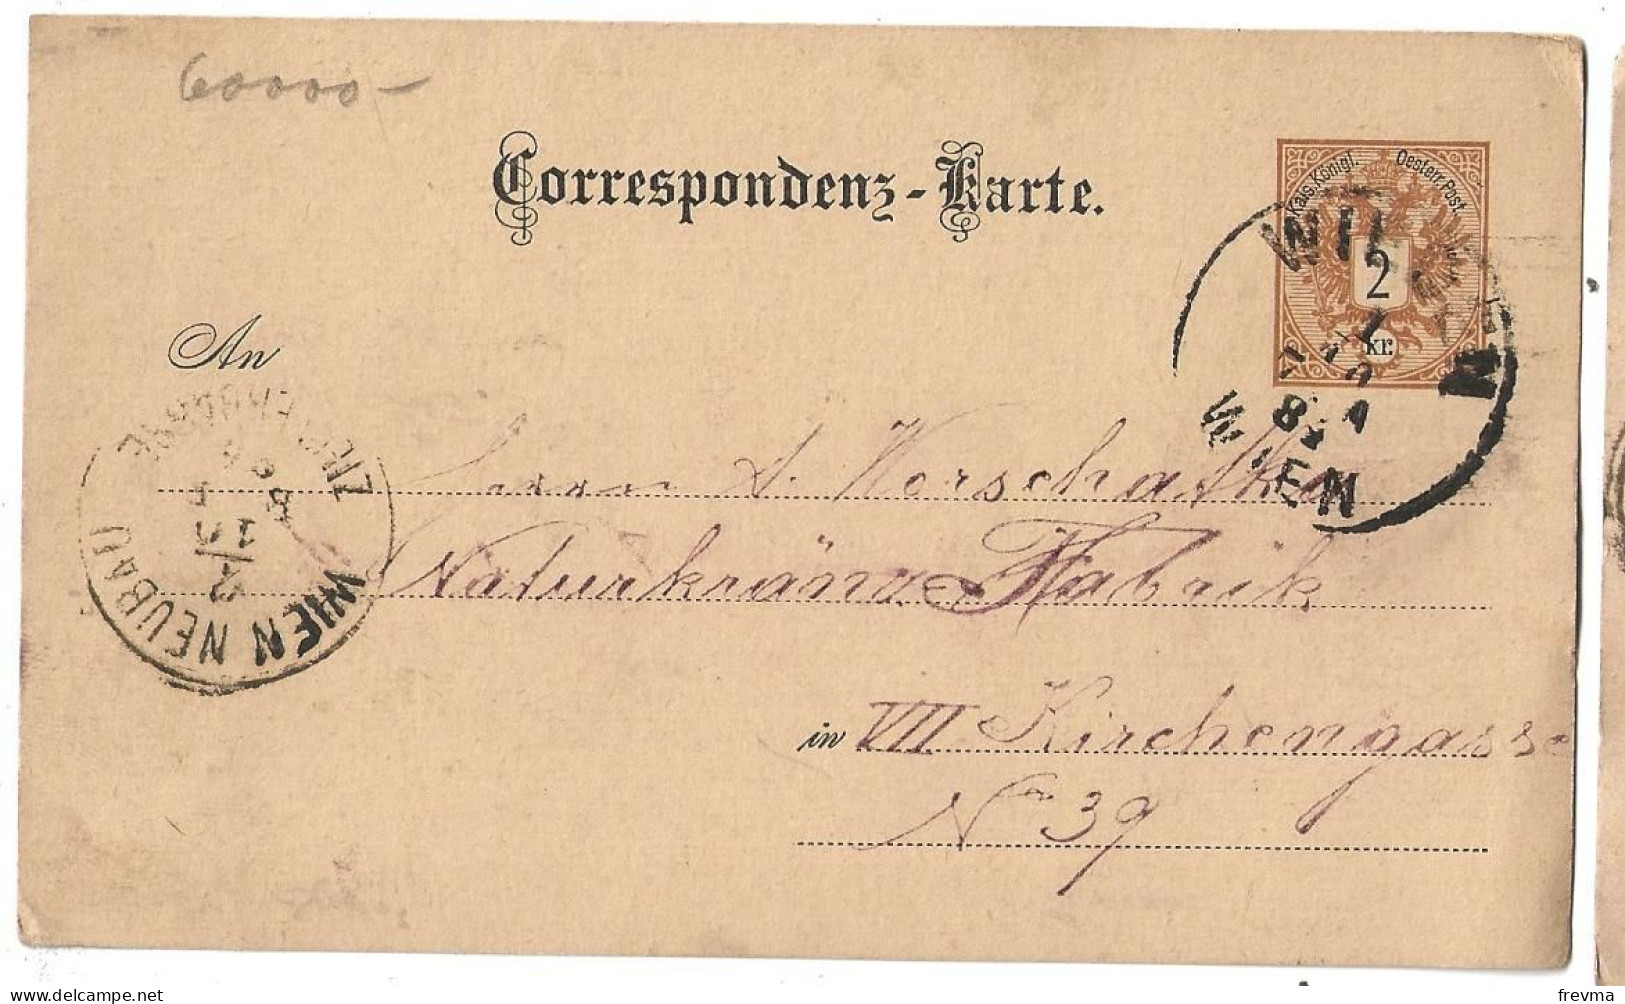 Entier Postaux Autriche Obliteration Wien Neubau Obliteration Wieden1884 - Letter-Cards